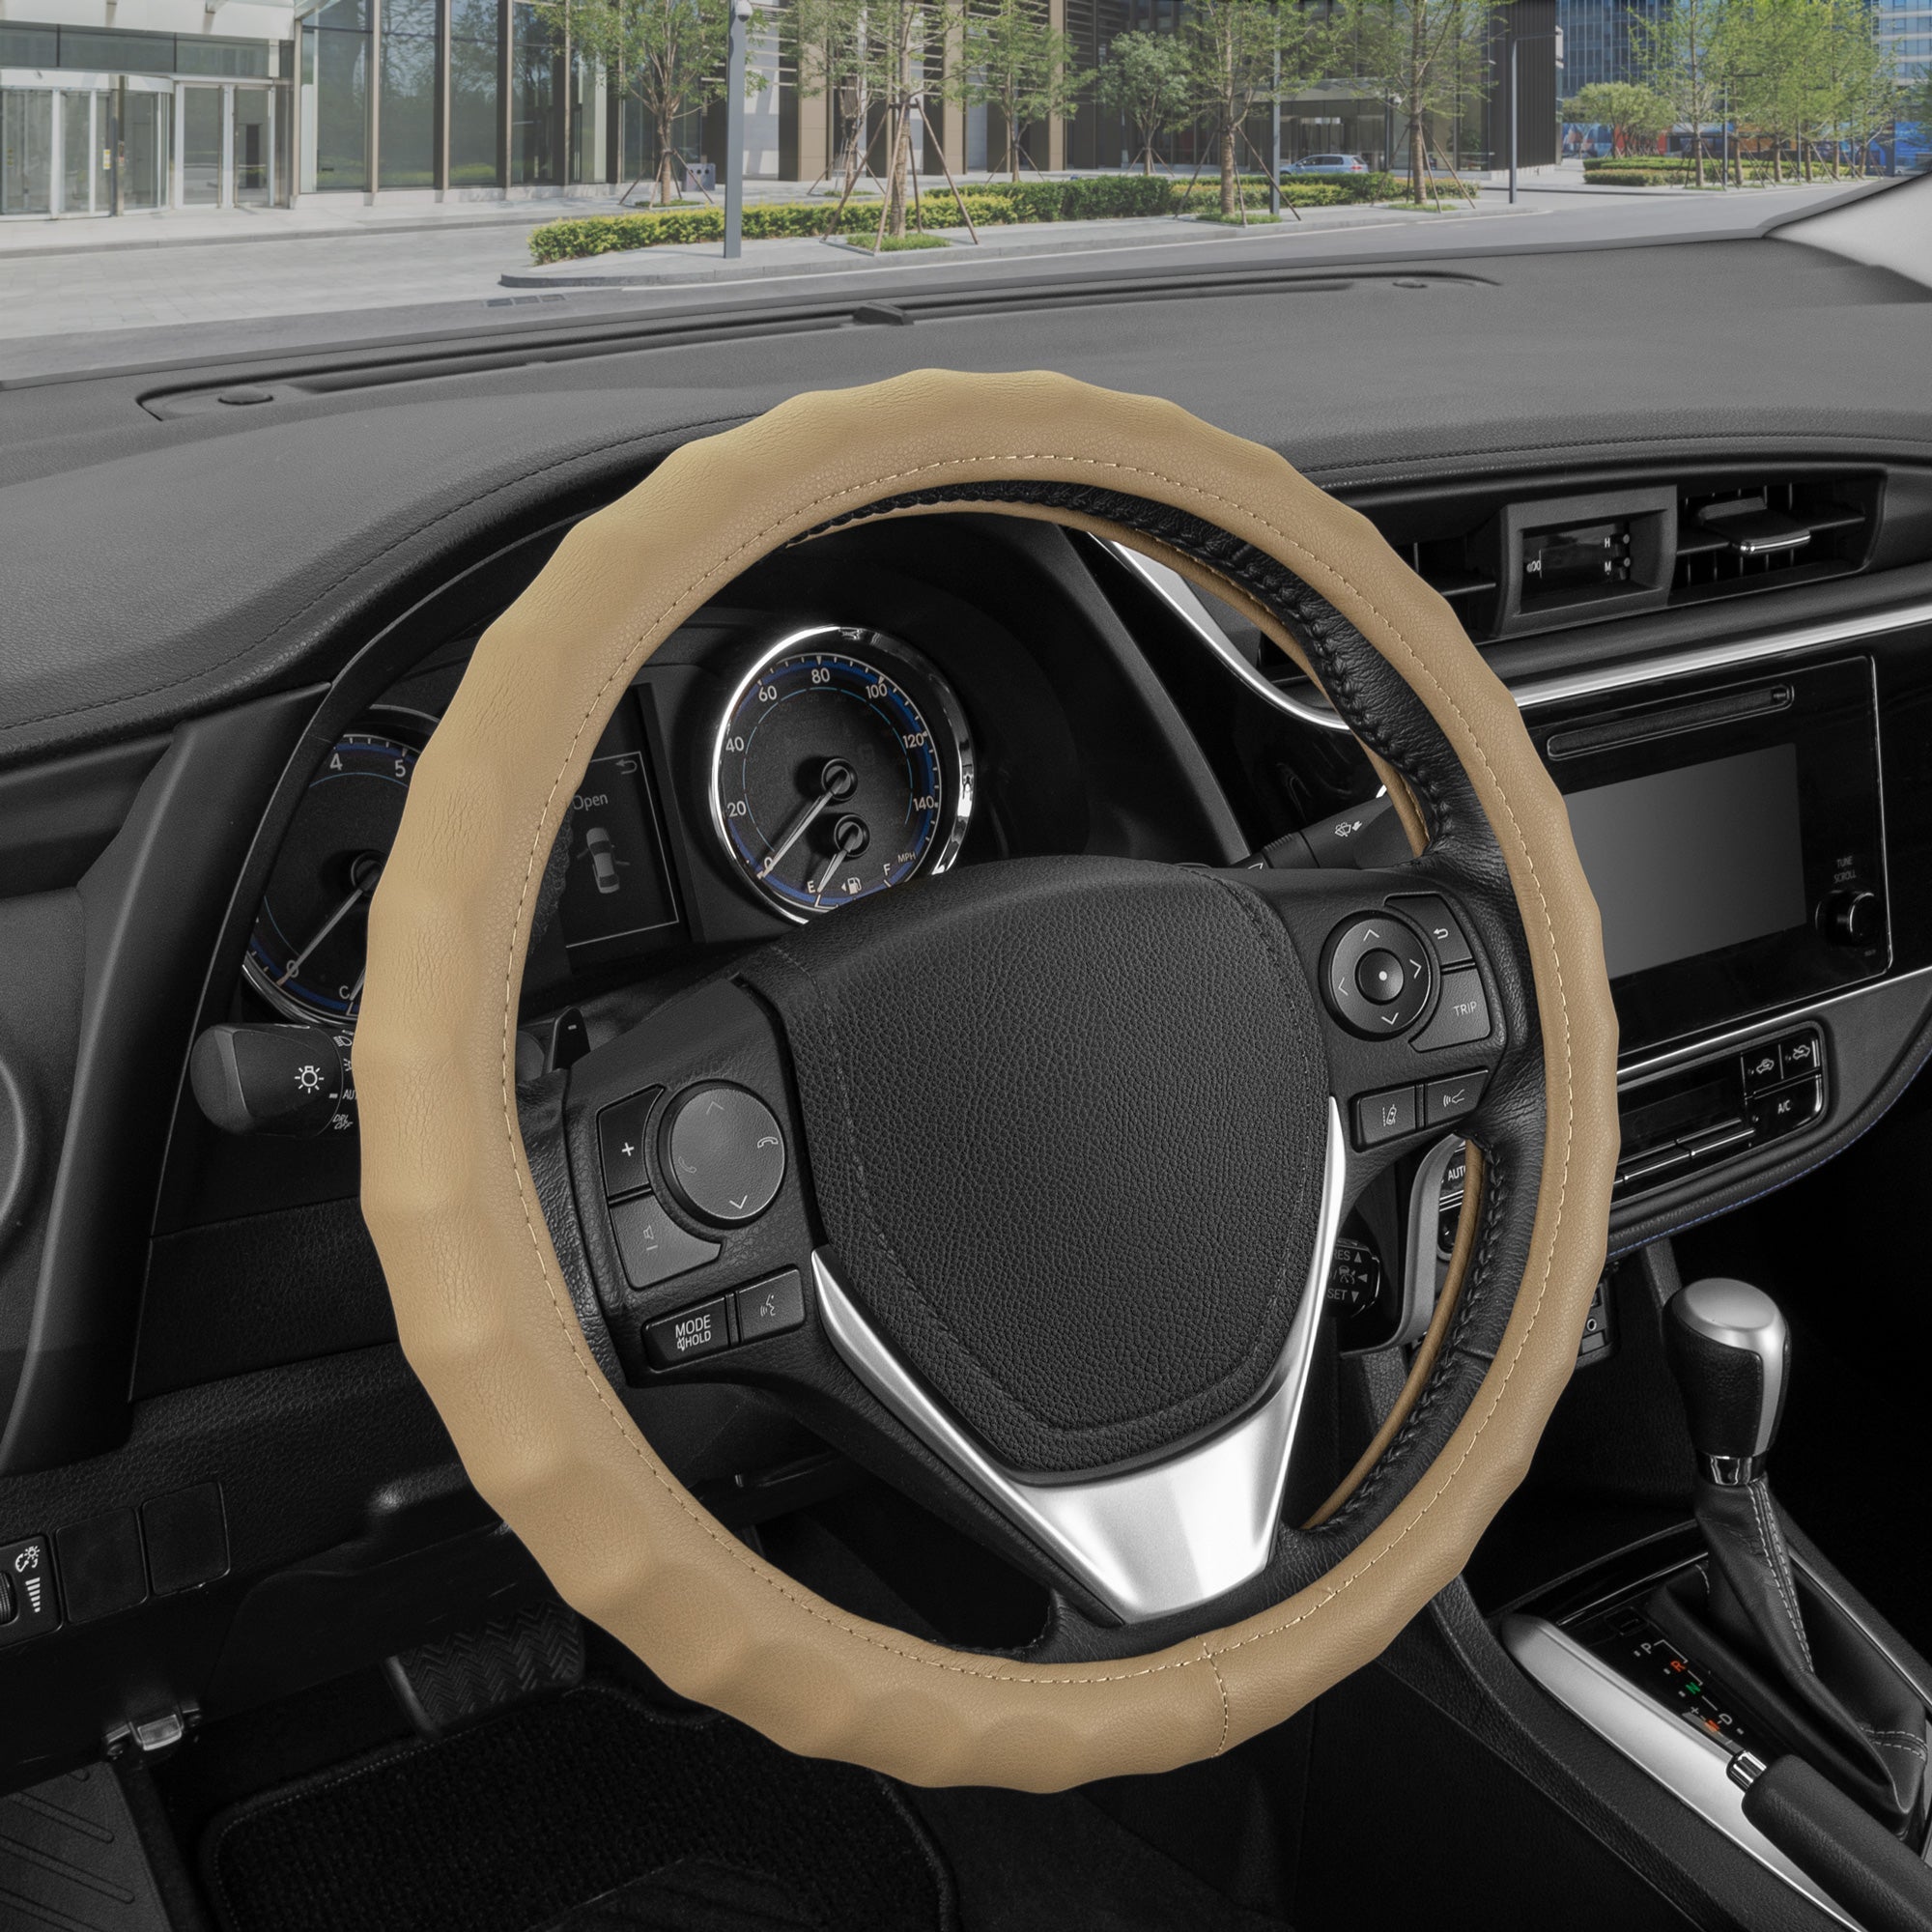 BDK Genuine Black Leather Steering Wheel Cover for Car, Large 15.5 - 16 inch – Ergonomic Comfort Grip for Men & Women, Car Steering Wheel Cover for Vehicles with Large Steering Wheels - Black:#000000